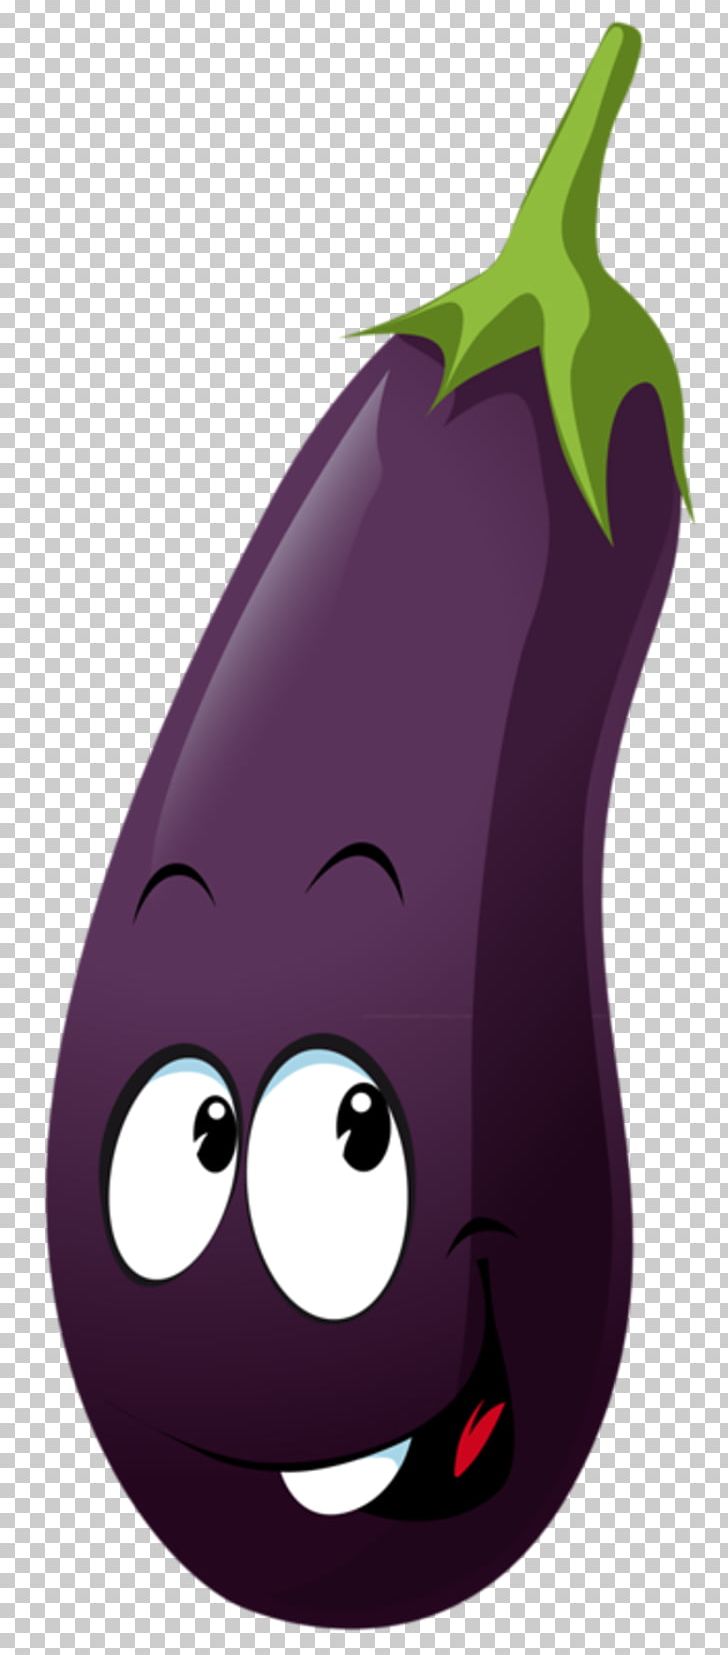 Eggplant Line Art PNG Transparent Images Free Download | Vector Files |  Pngtree